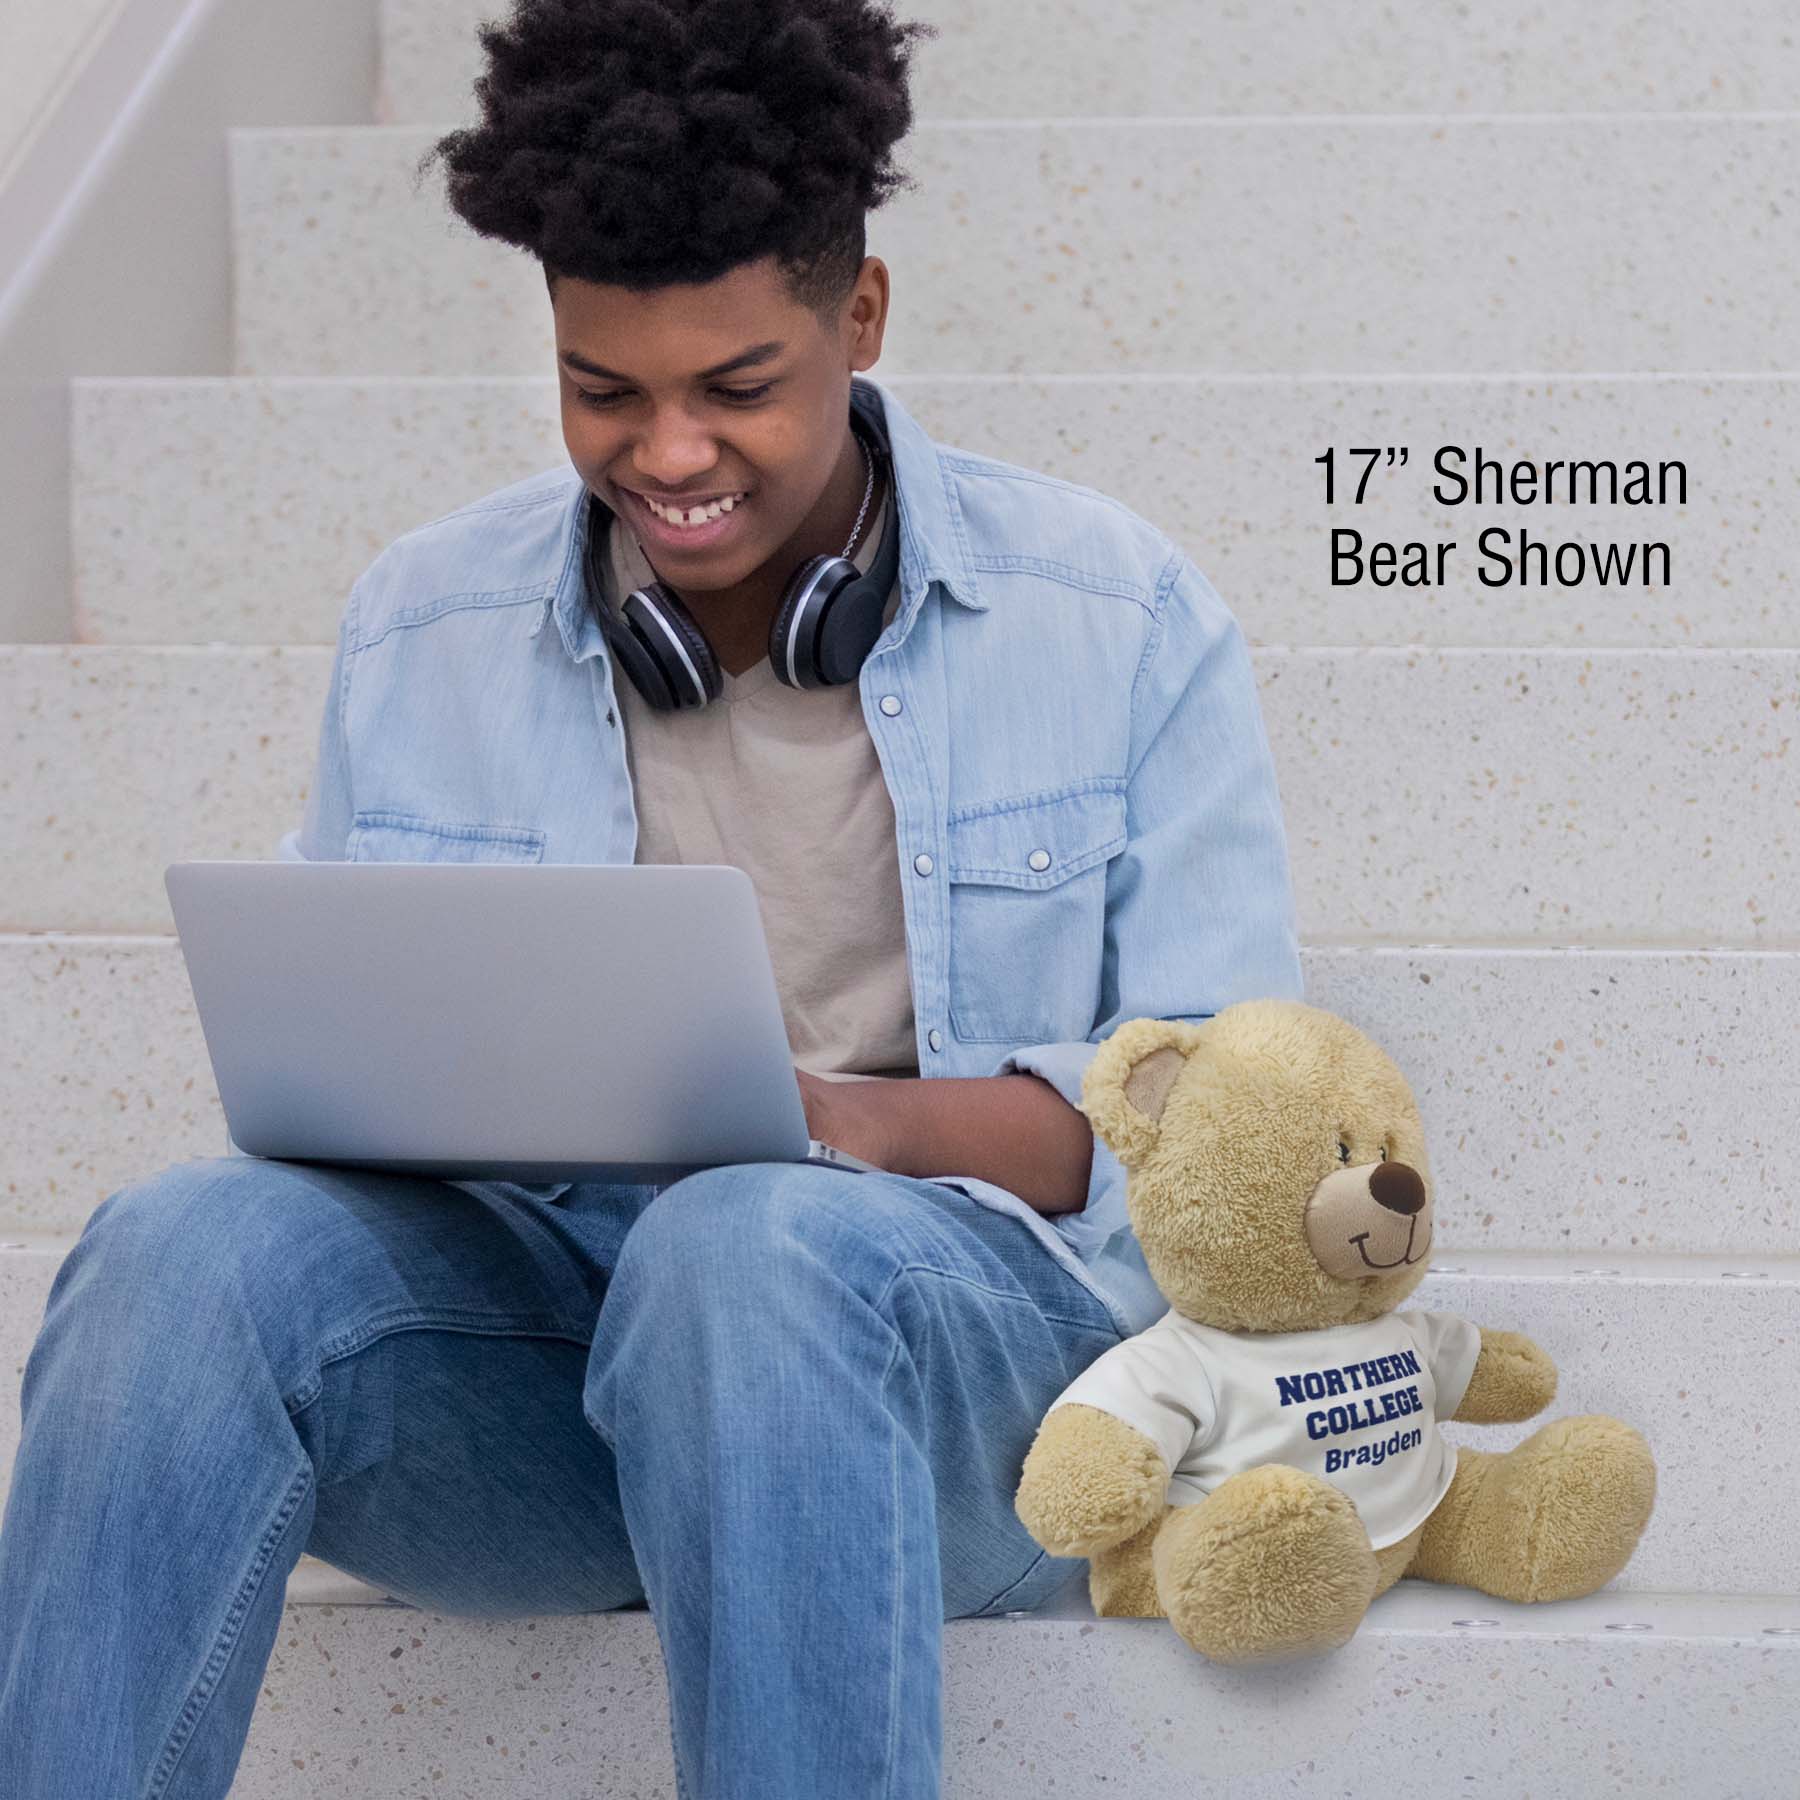 Personalized School Spirit Teddy Bear | Personalized Graduation Bear